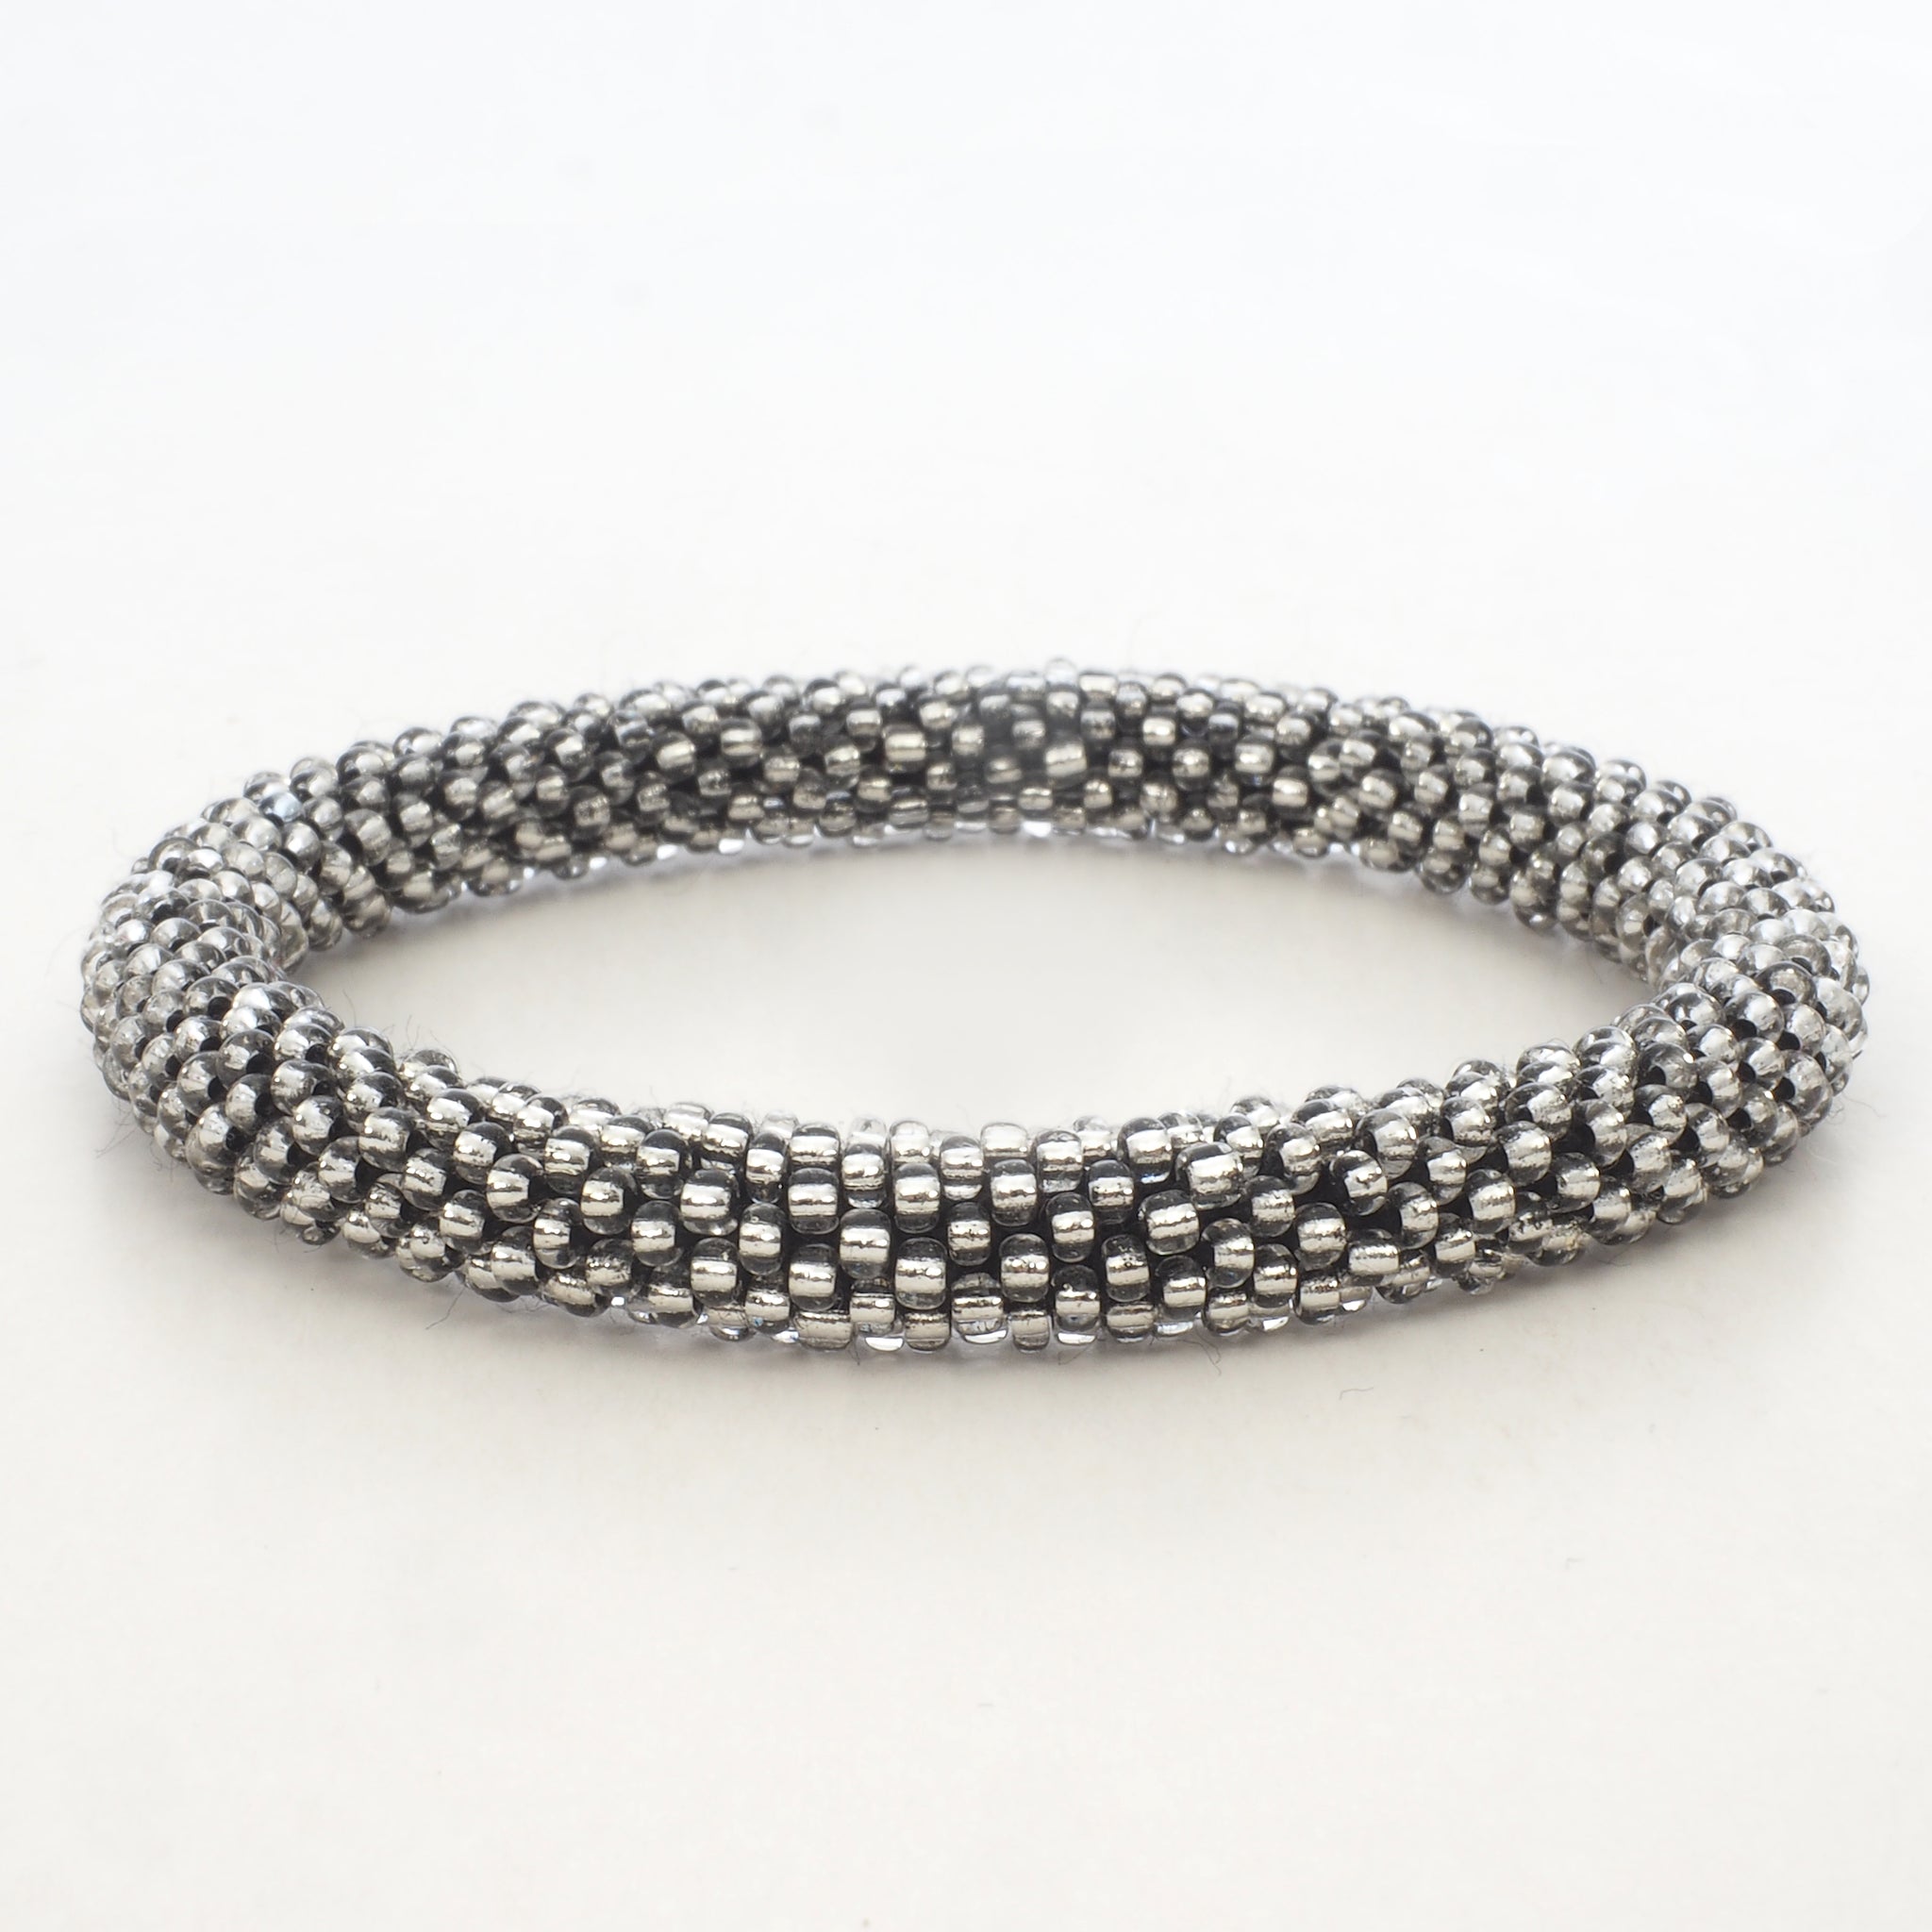 Beaded Bracelet - Silver Shiny Transparent Dark